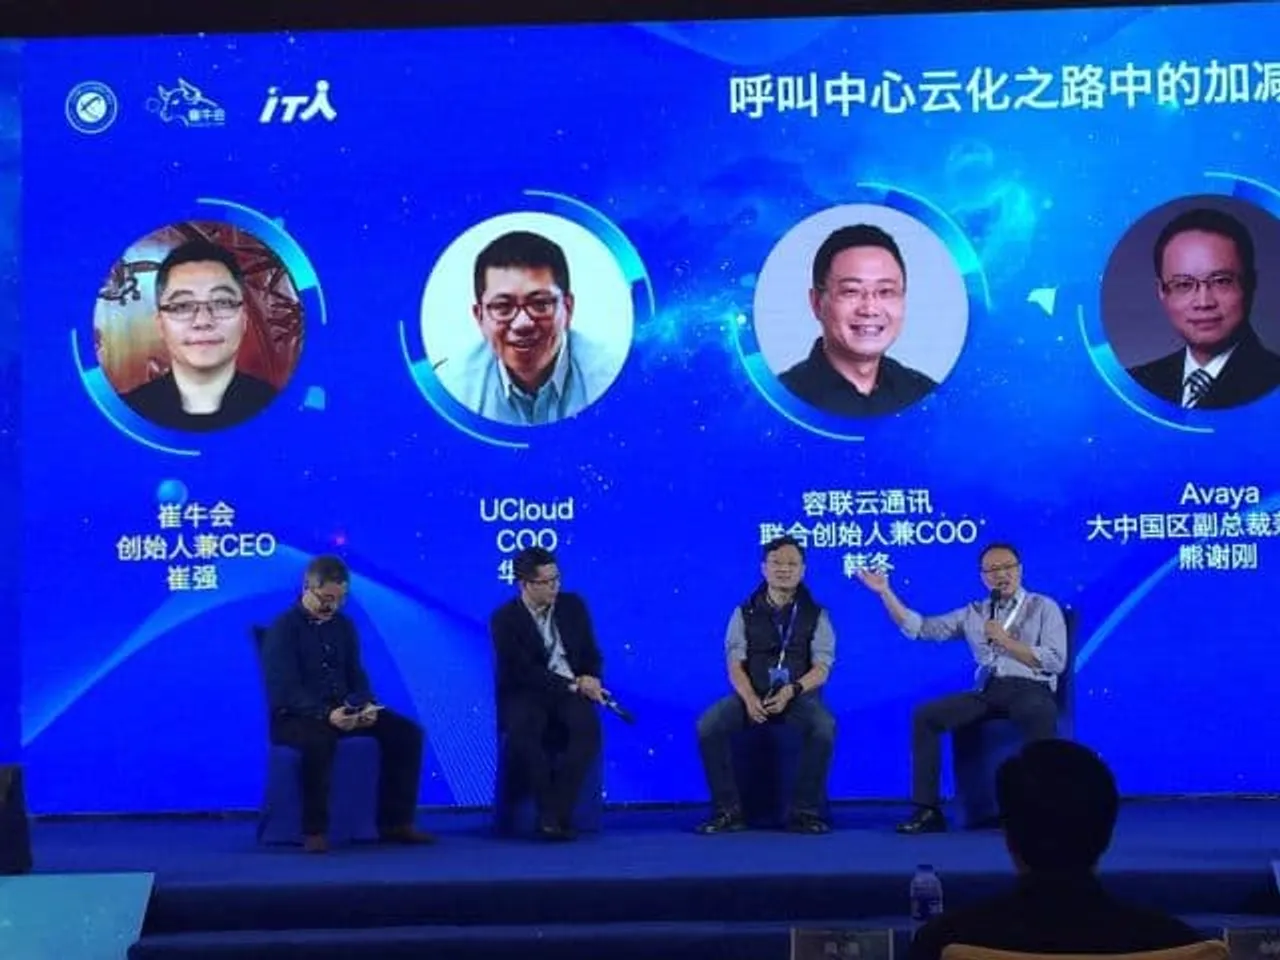 Avaya Yuntongxun and UCloud jointly launched A Cloud